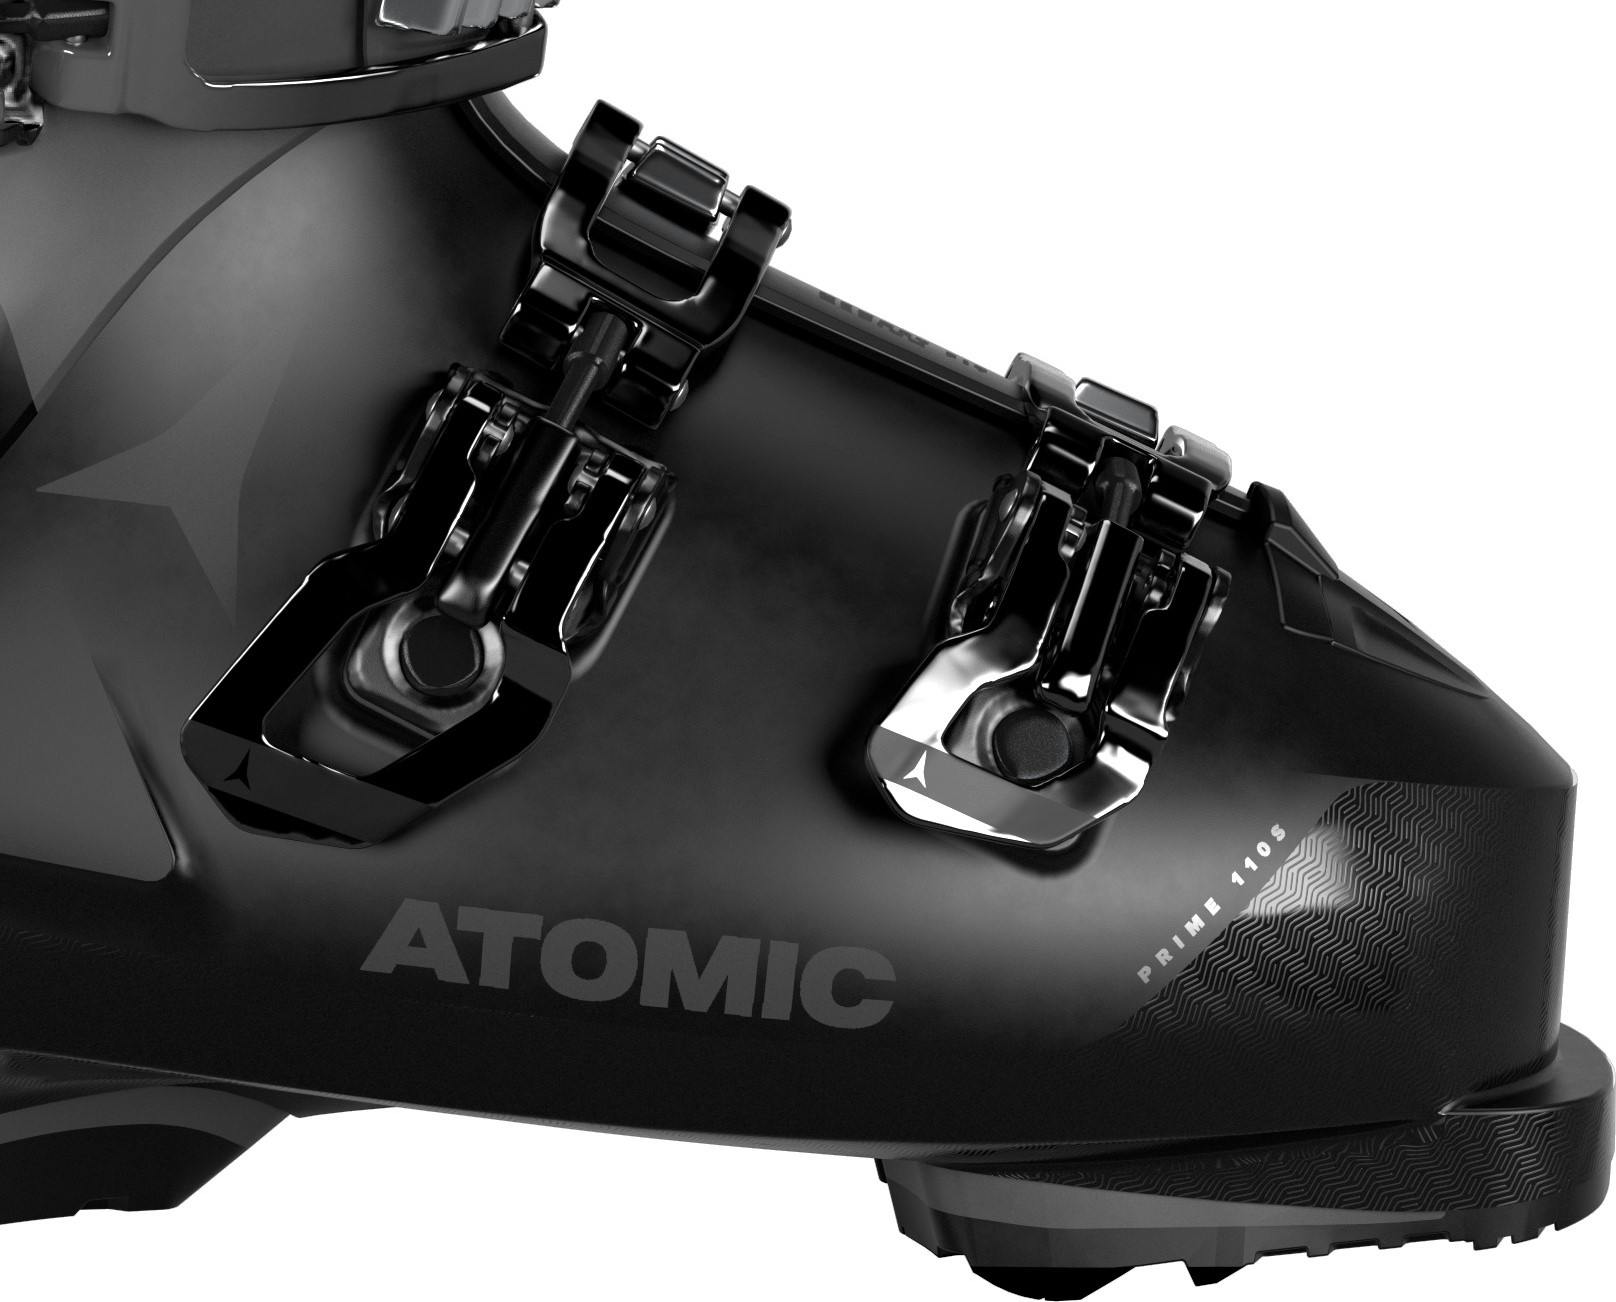 Atomic Hawx Prime 110 S GW Ski Boots · 2024 · 29/29.5 · Black/Anthracite